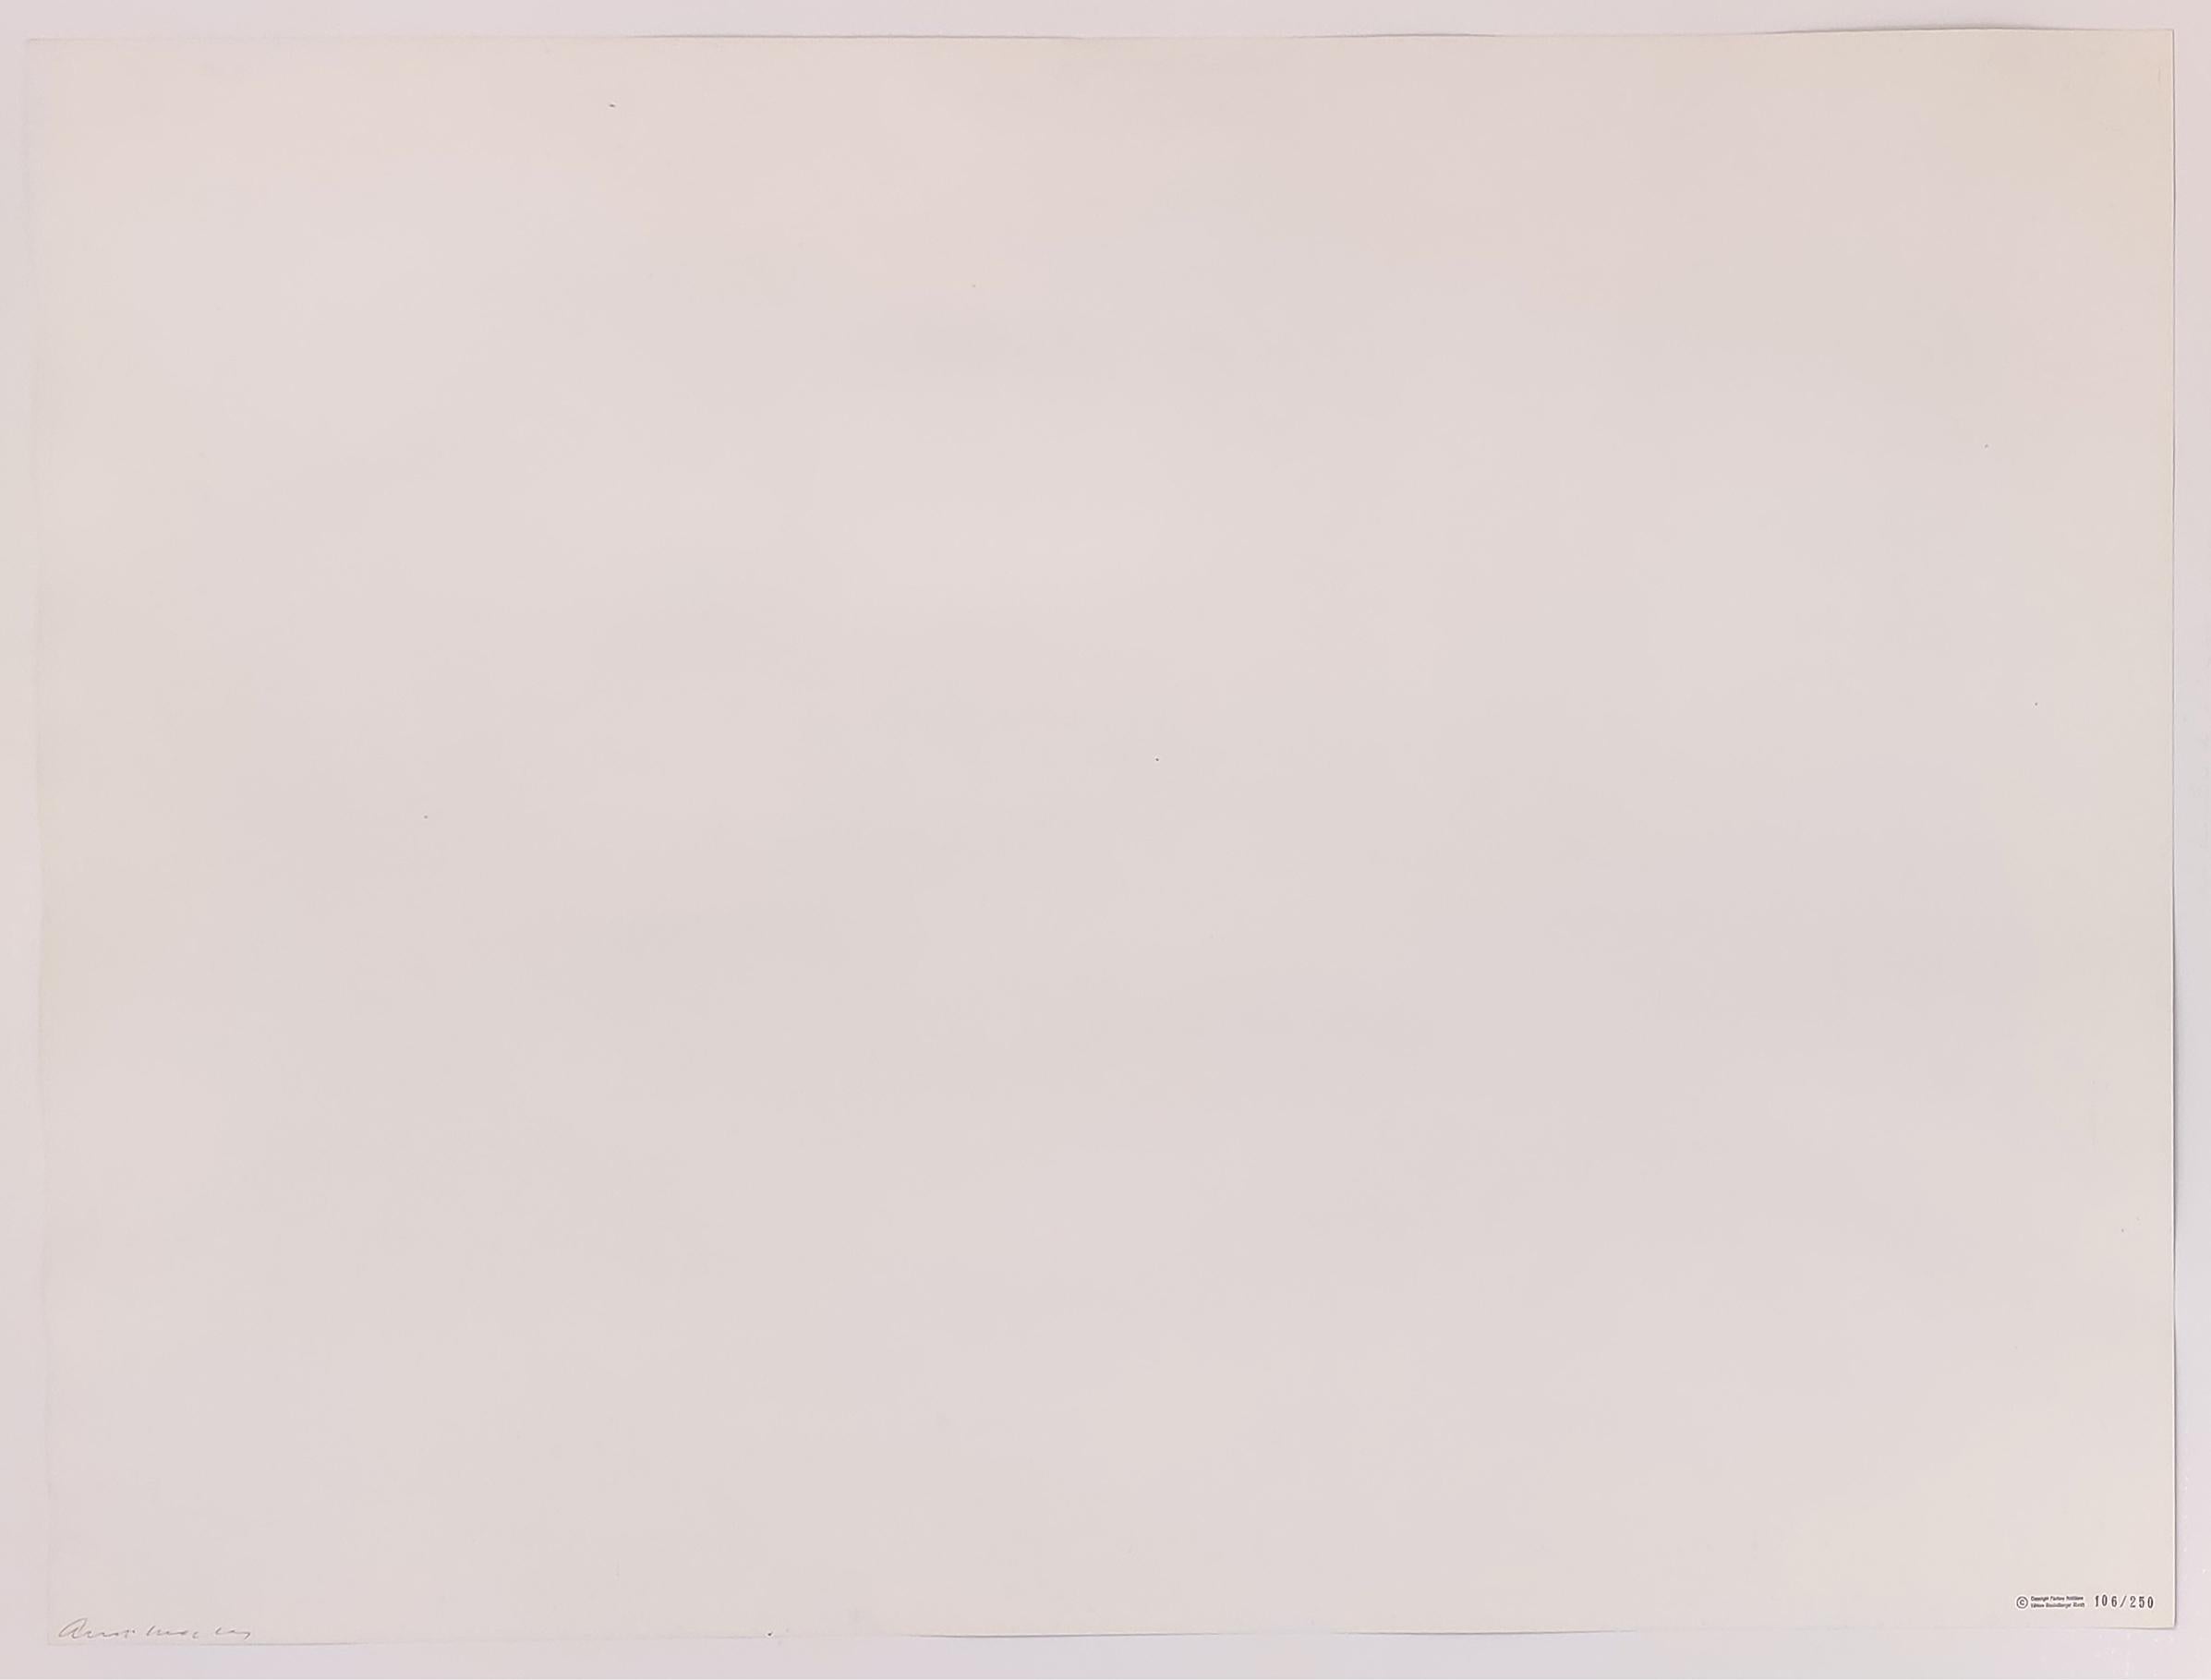 CHAISE ÉLECTRIC CHAIR FS II.79 - Print de Andy Warhol